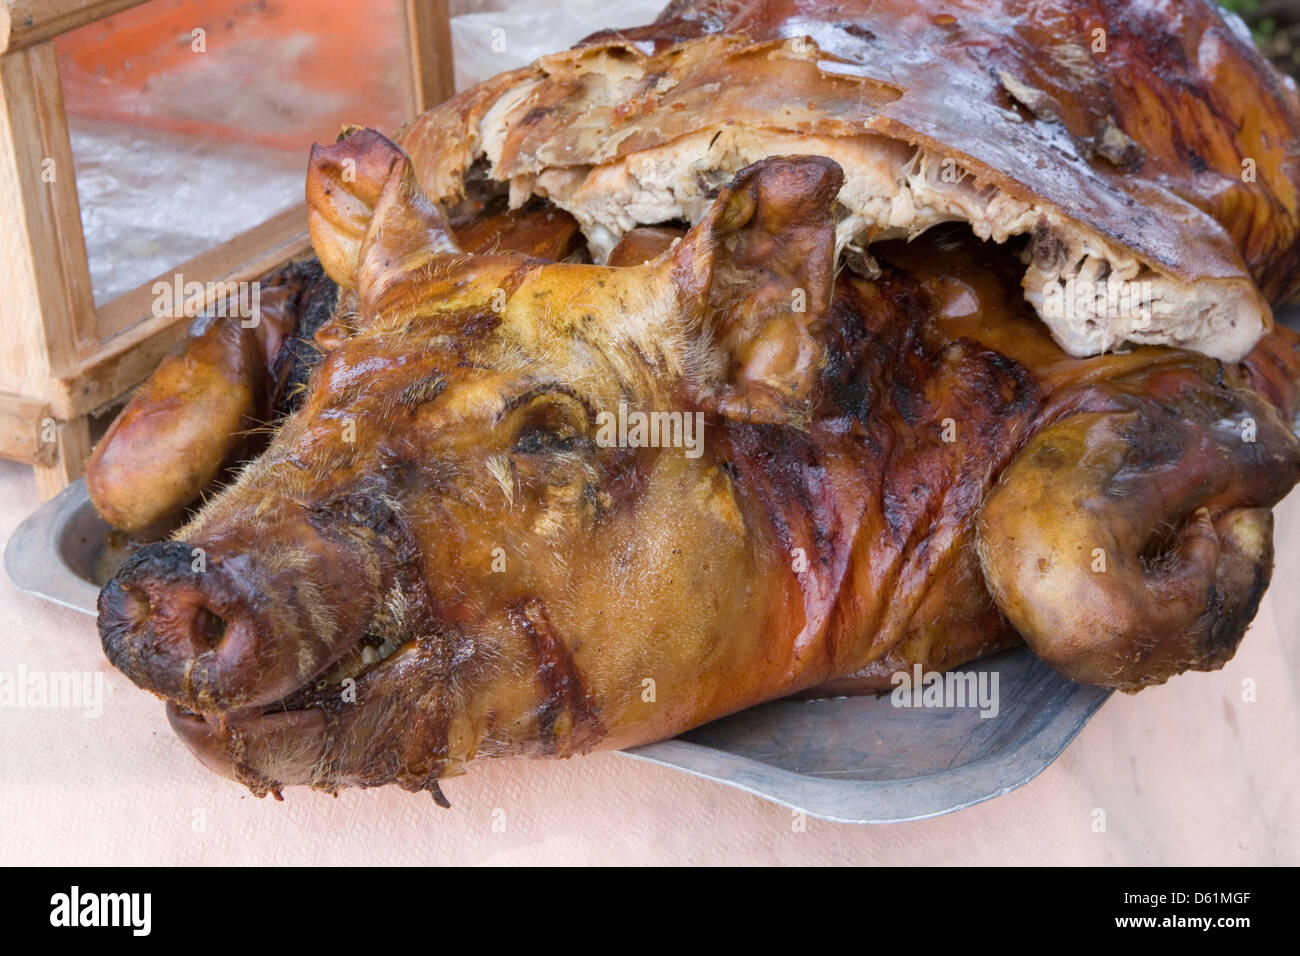 Cuba: traditional roast pig Stock Photo